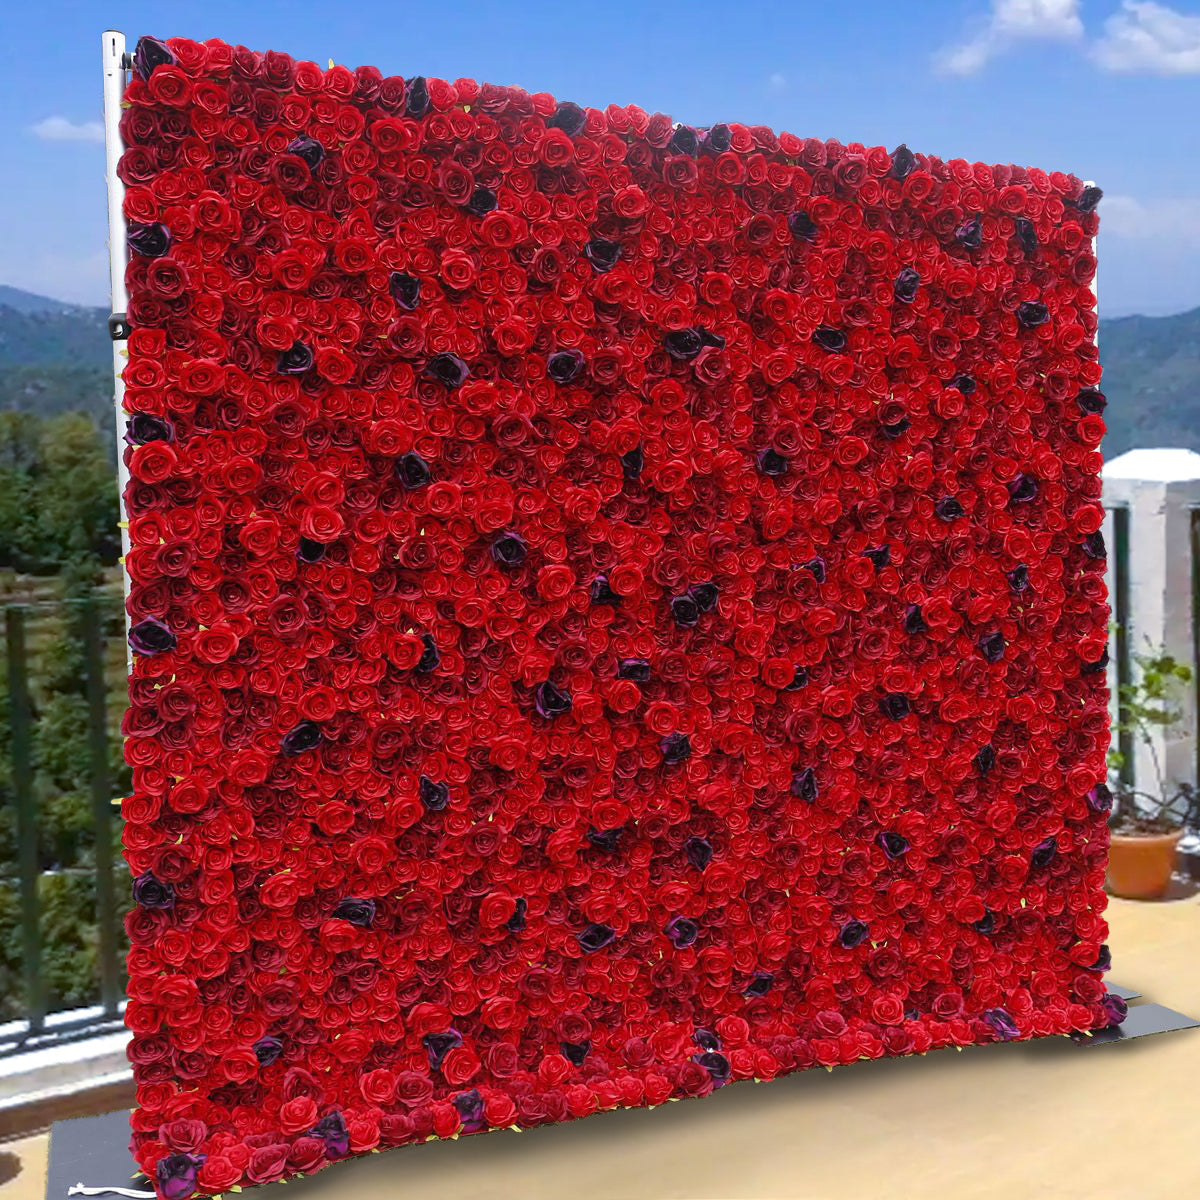 3D Artificial Flower Wall Arrangement Wedding Party Birthday Backdrop Decor HQ9037